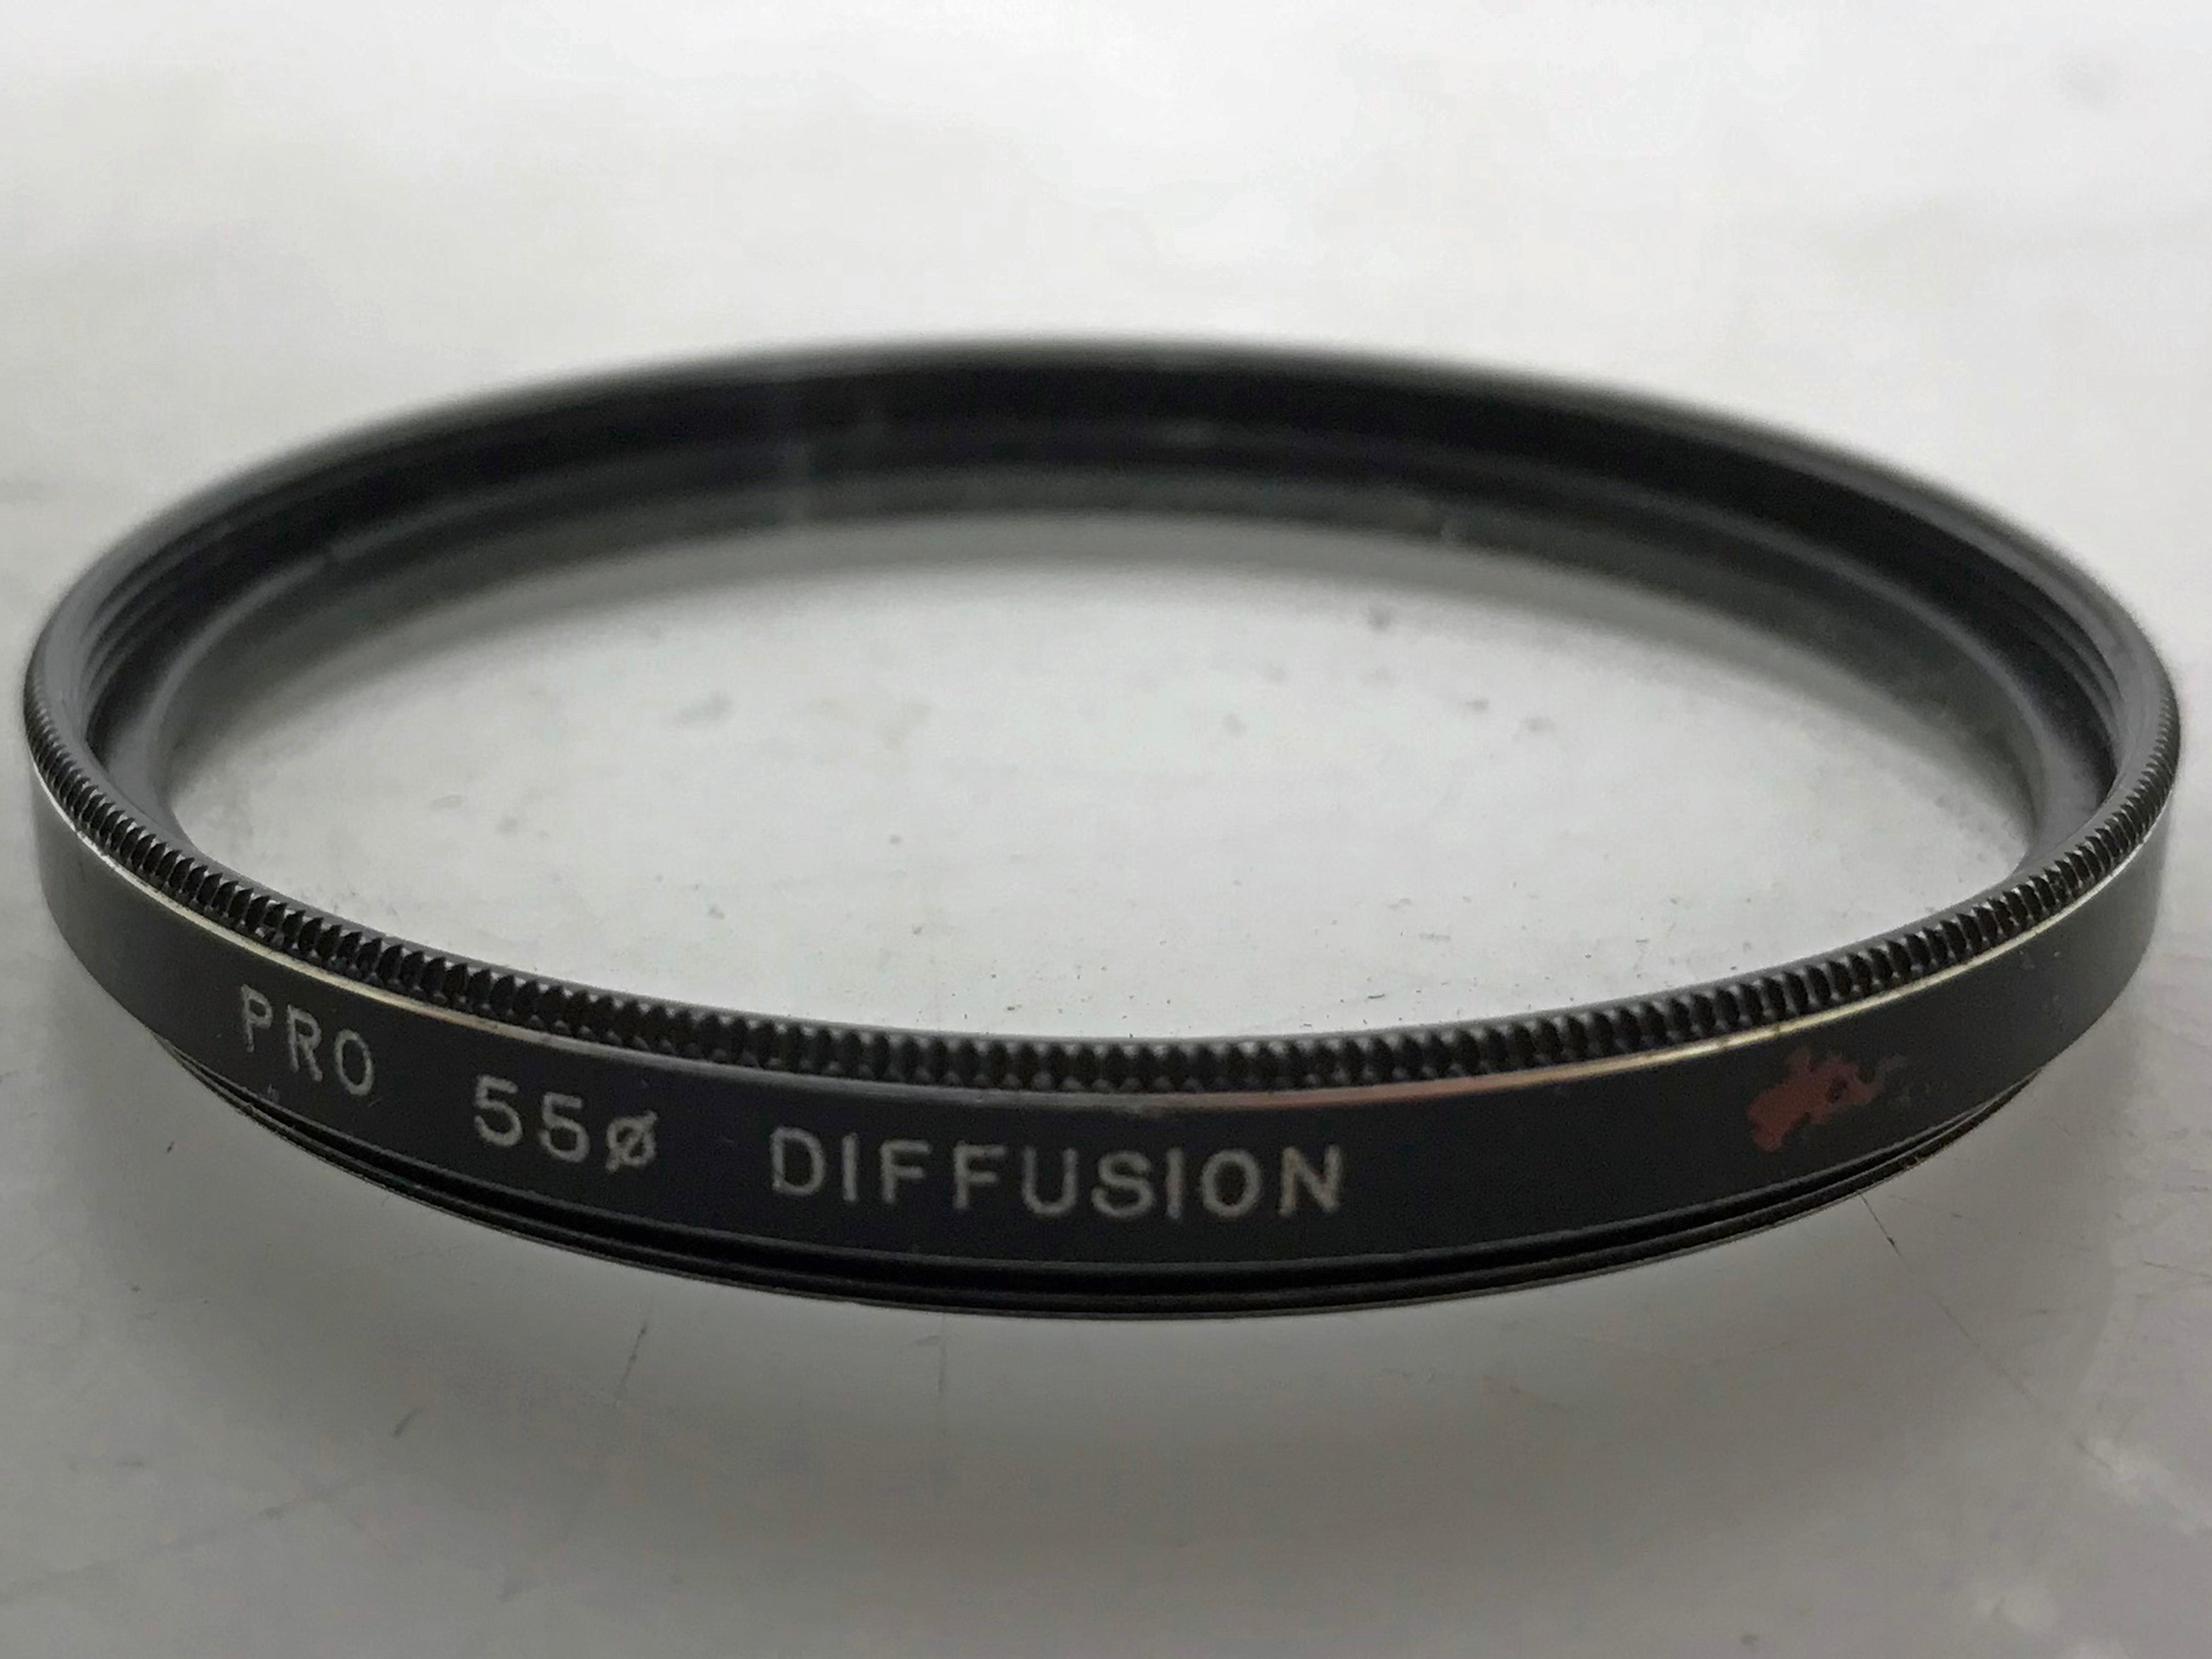 Pro 55mm Diffusion Filter